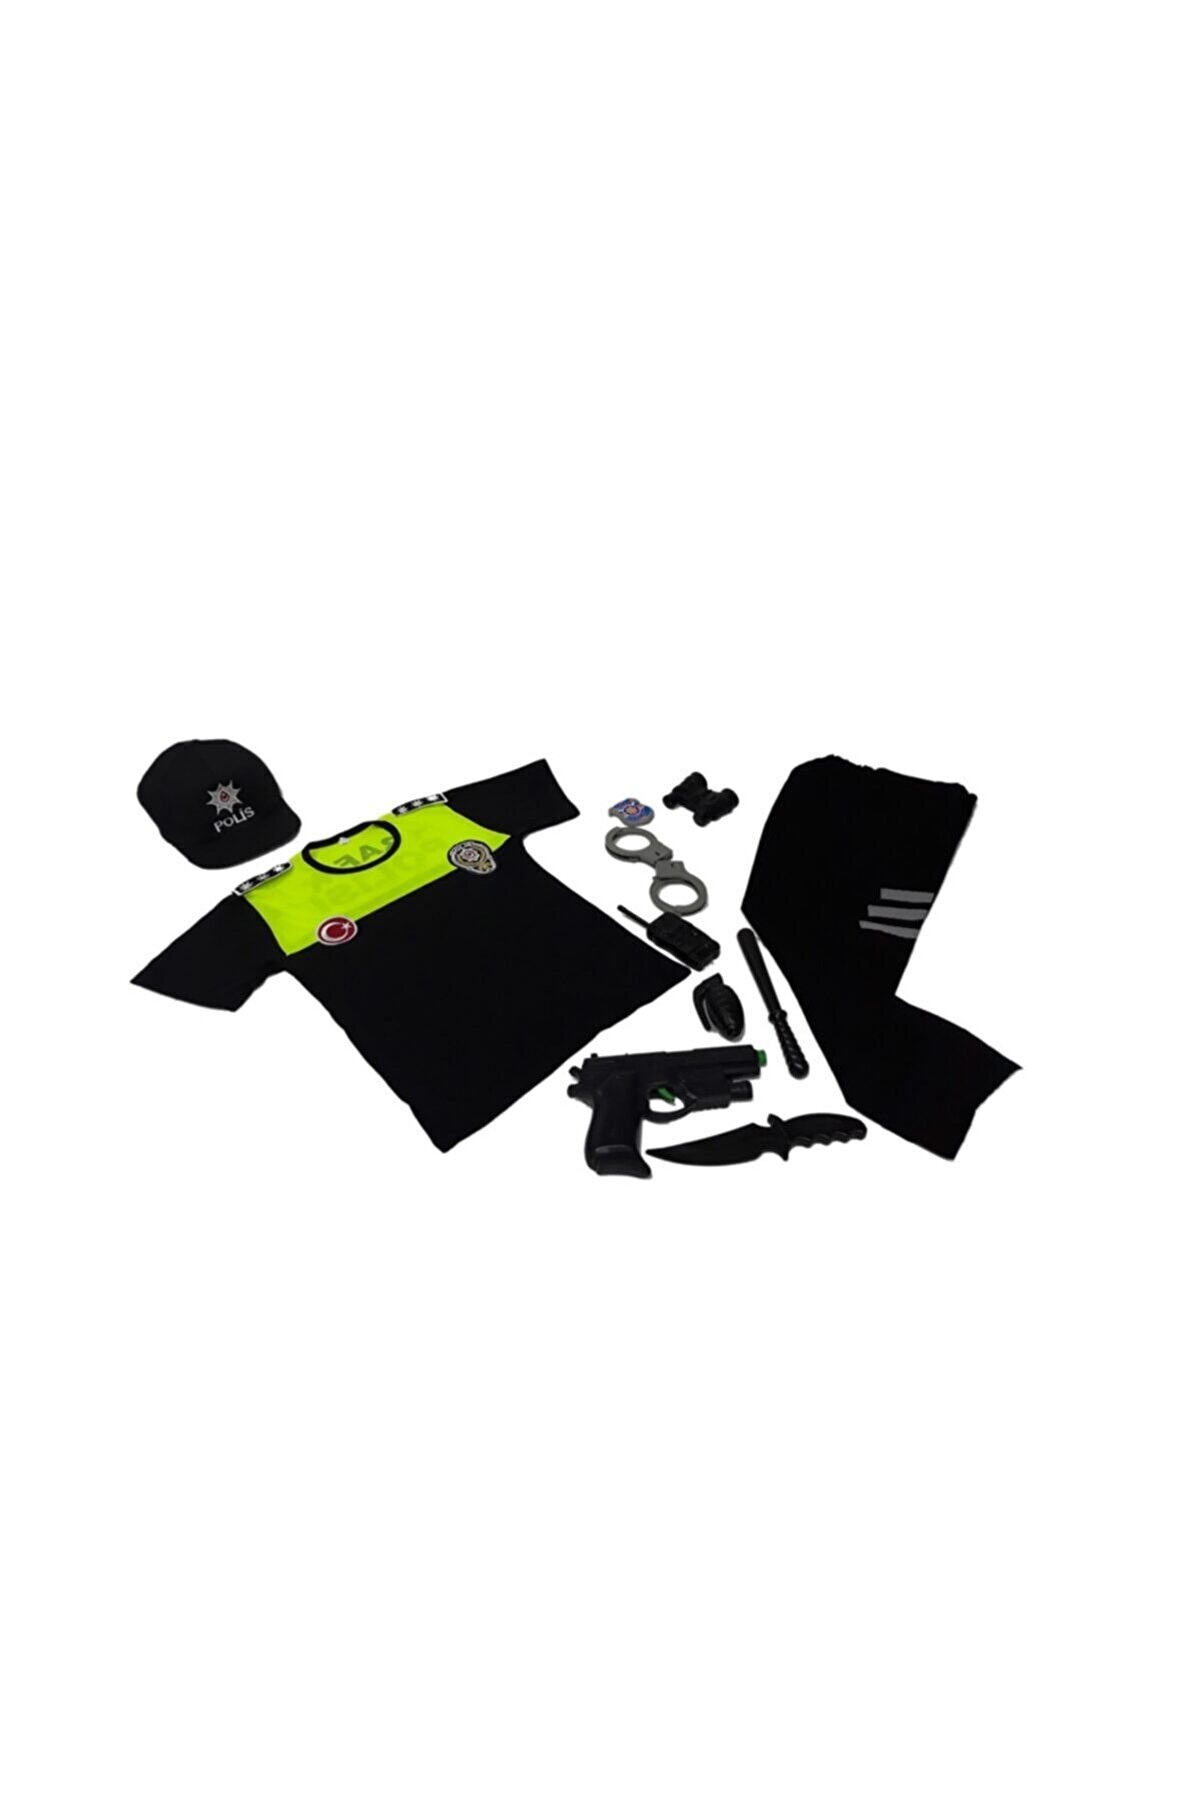 fabrikoloji Unisex Çocuk Renkli Trafik Polis Kostümü Kıyafet Üniforma 20y21s03f009